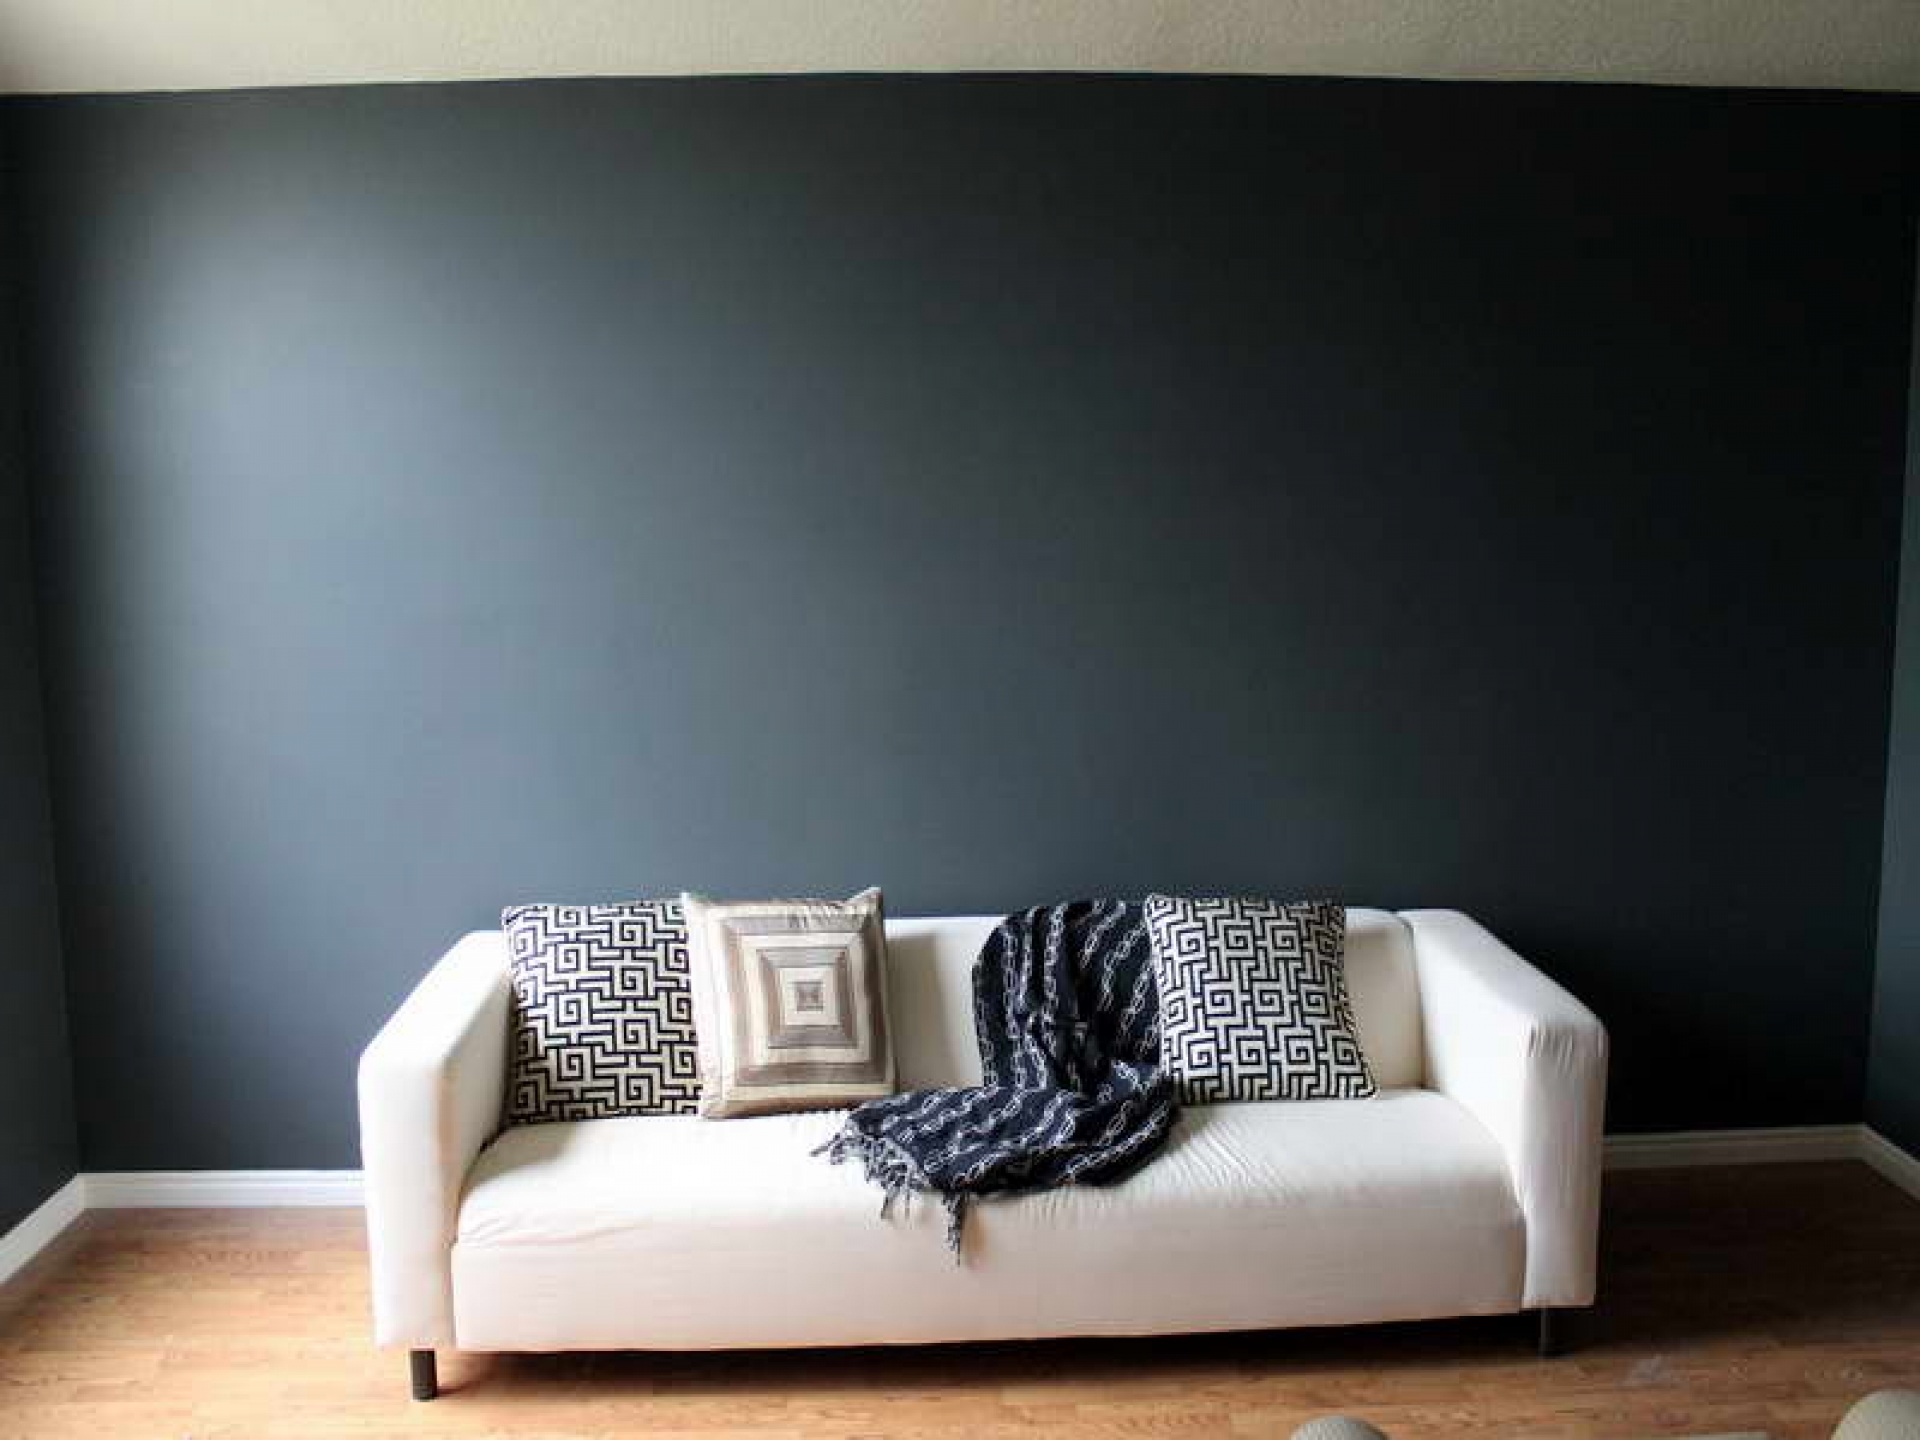 Wall: Black Painted Wall